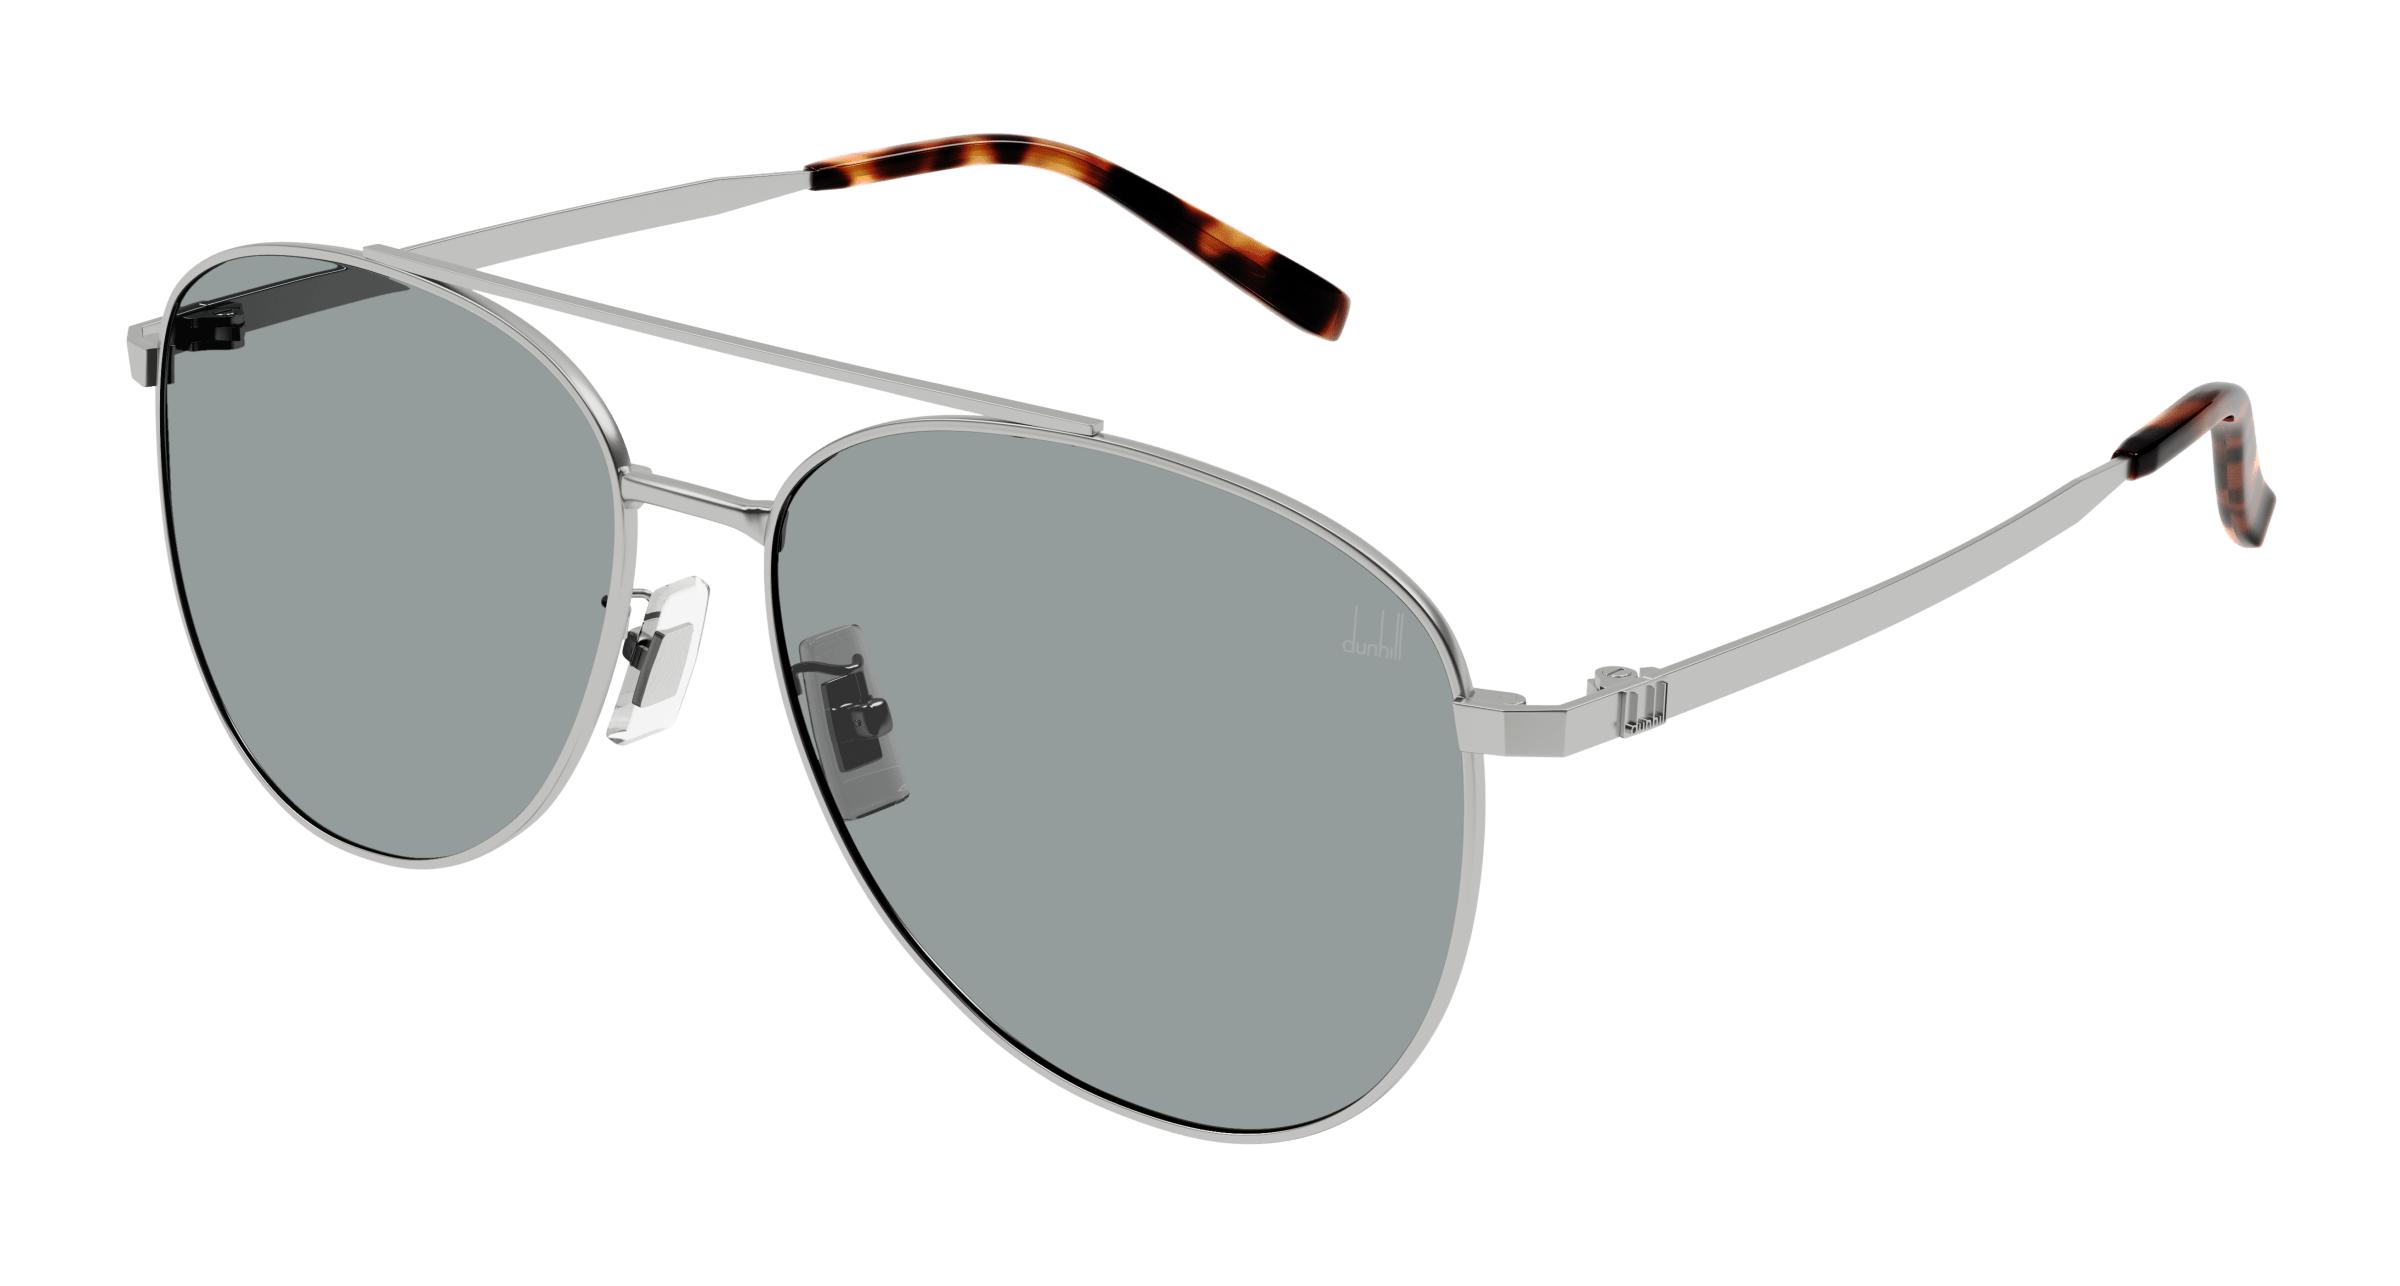 Buy Dunhill Du0012s 004 Silver (004) prescription Sunglasses